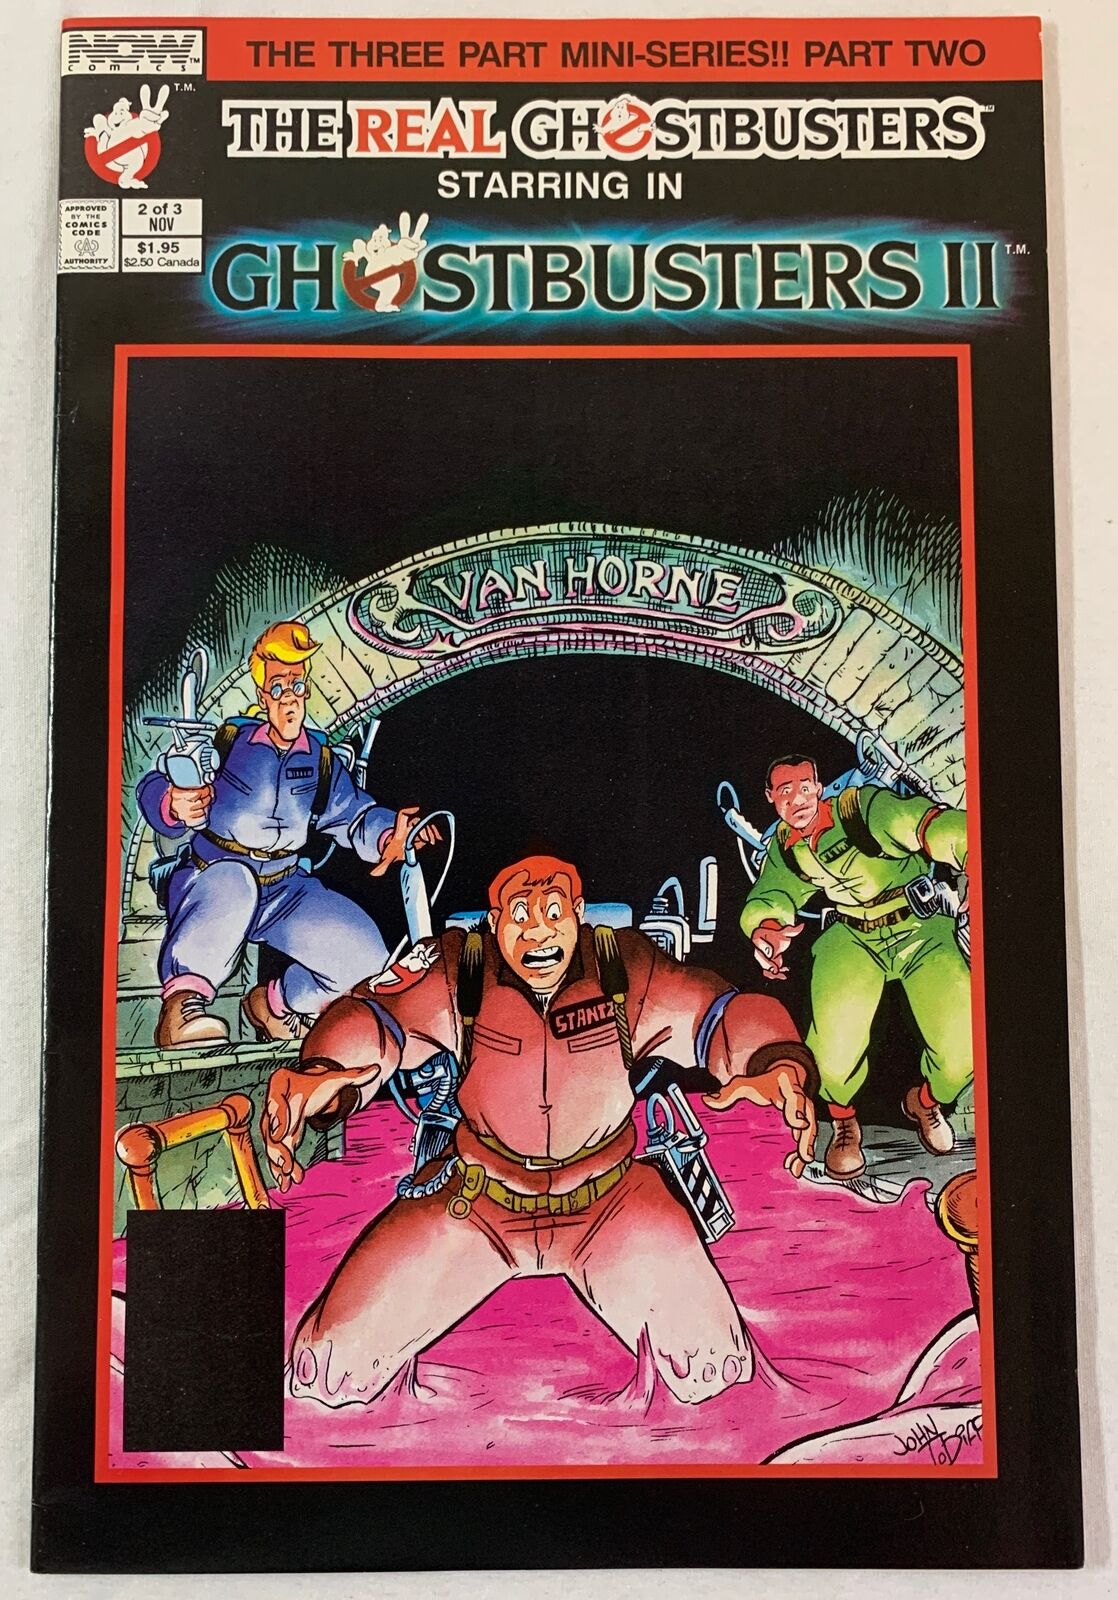 Real Ghostbusters GHOSTBUSTERS II #2 ~ has spine stresses, general wear